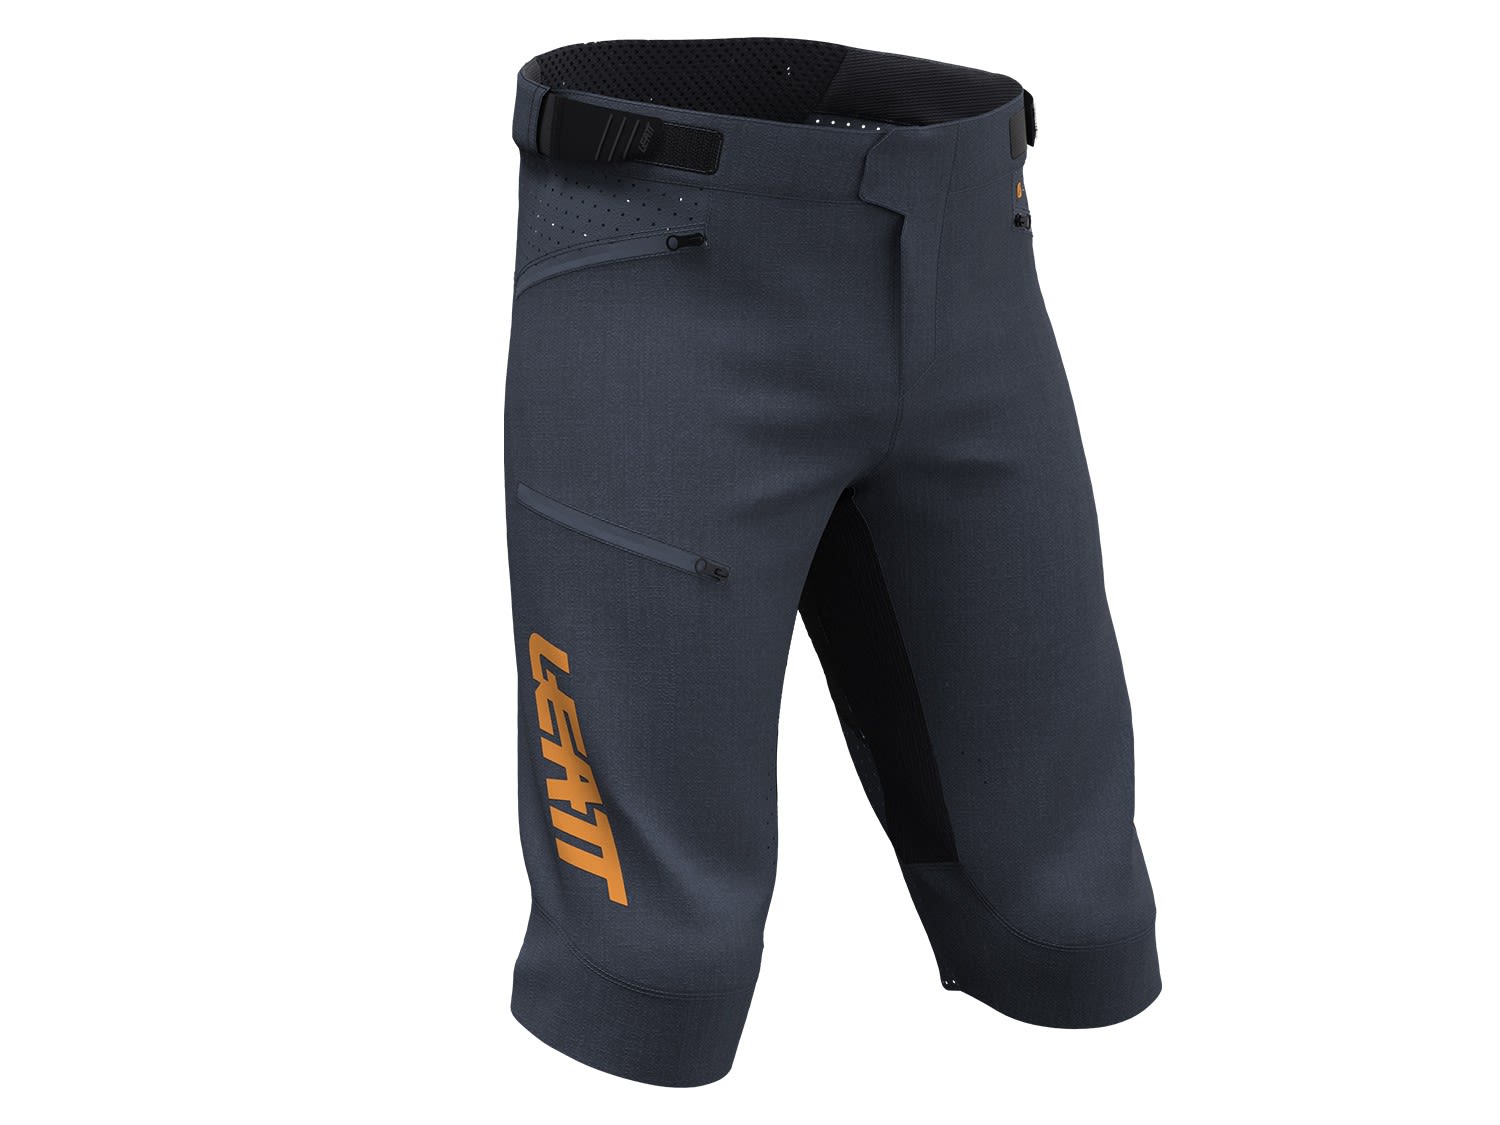 Leatt MTB Enduro 3-0 Shorts Grau- Male Shorts- Grsse S - Farbe Rust